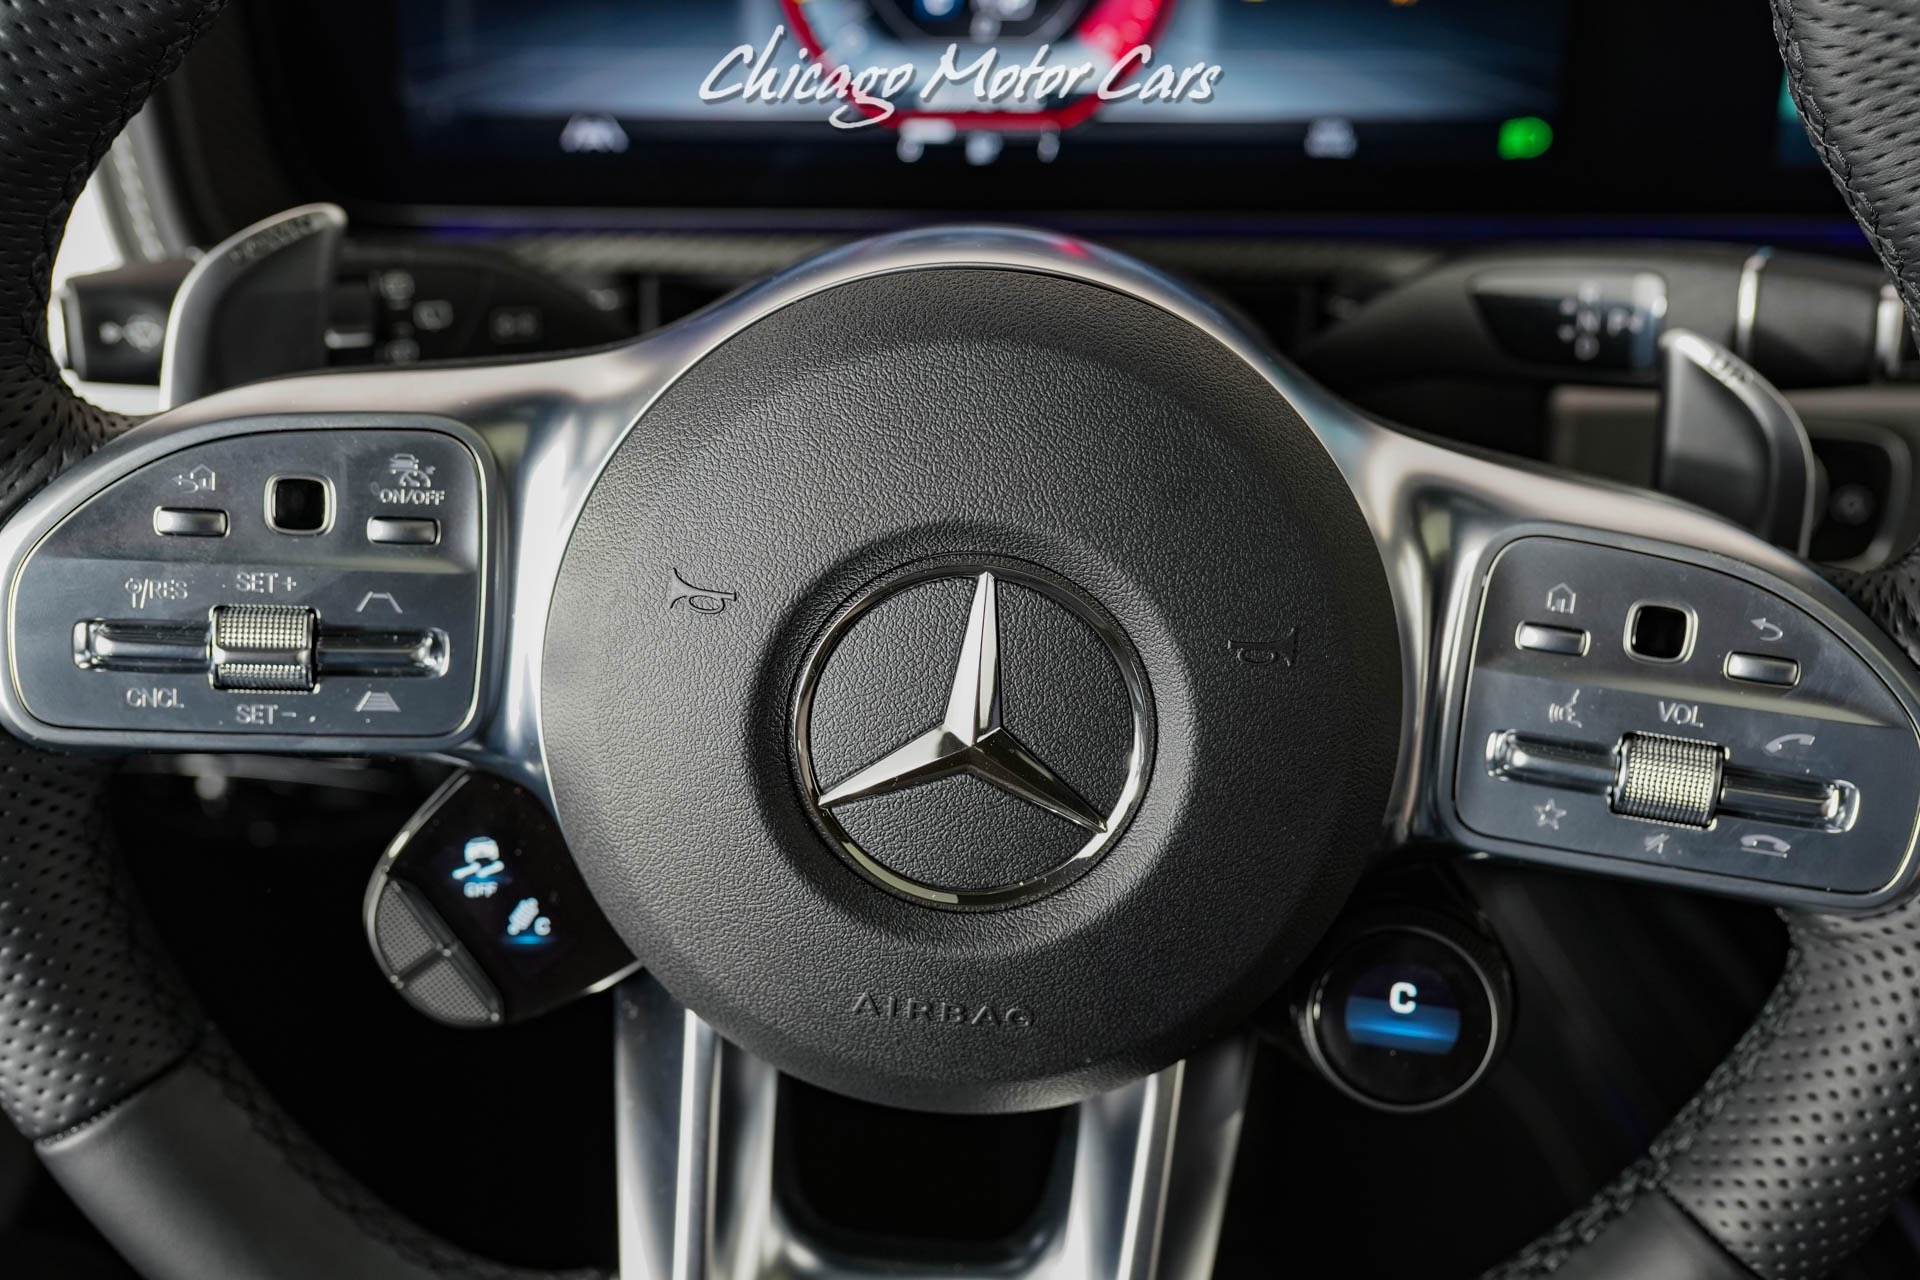 2021 Mercedes-Benz G63 AMG Built by Keyvany 🧡, Price: $539,000 - - # mercedes #benz #mercedesbenz #mercedesamg #keyvany #supercar…